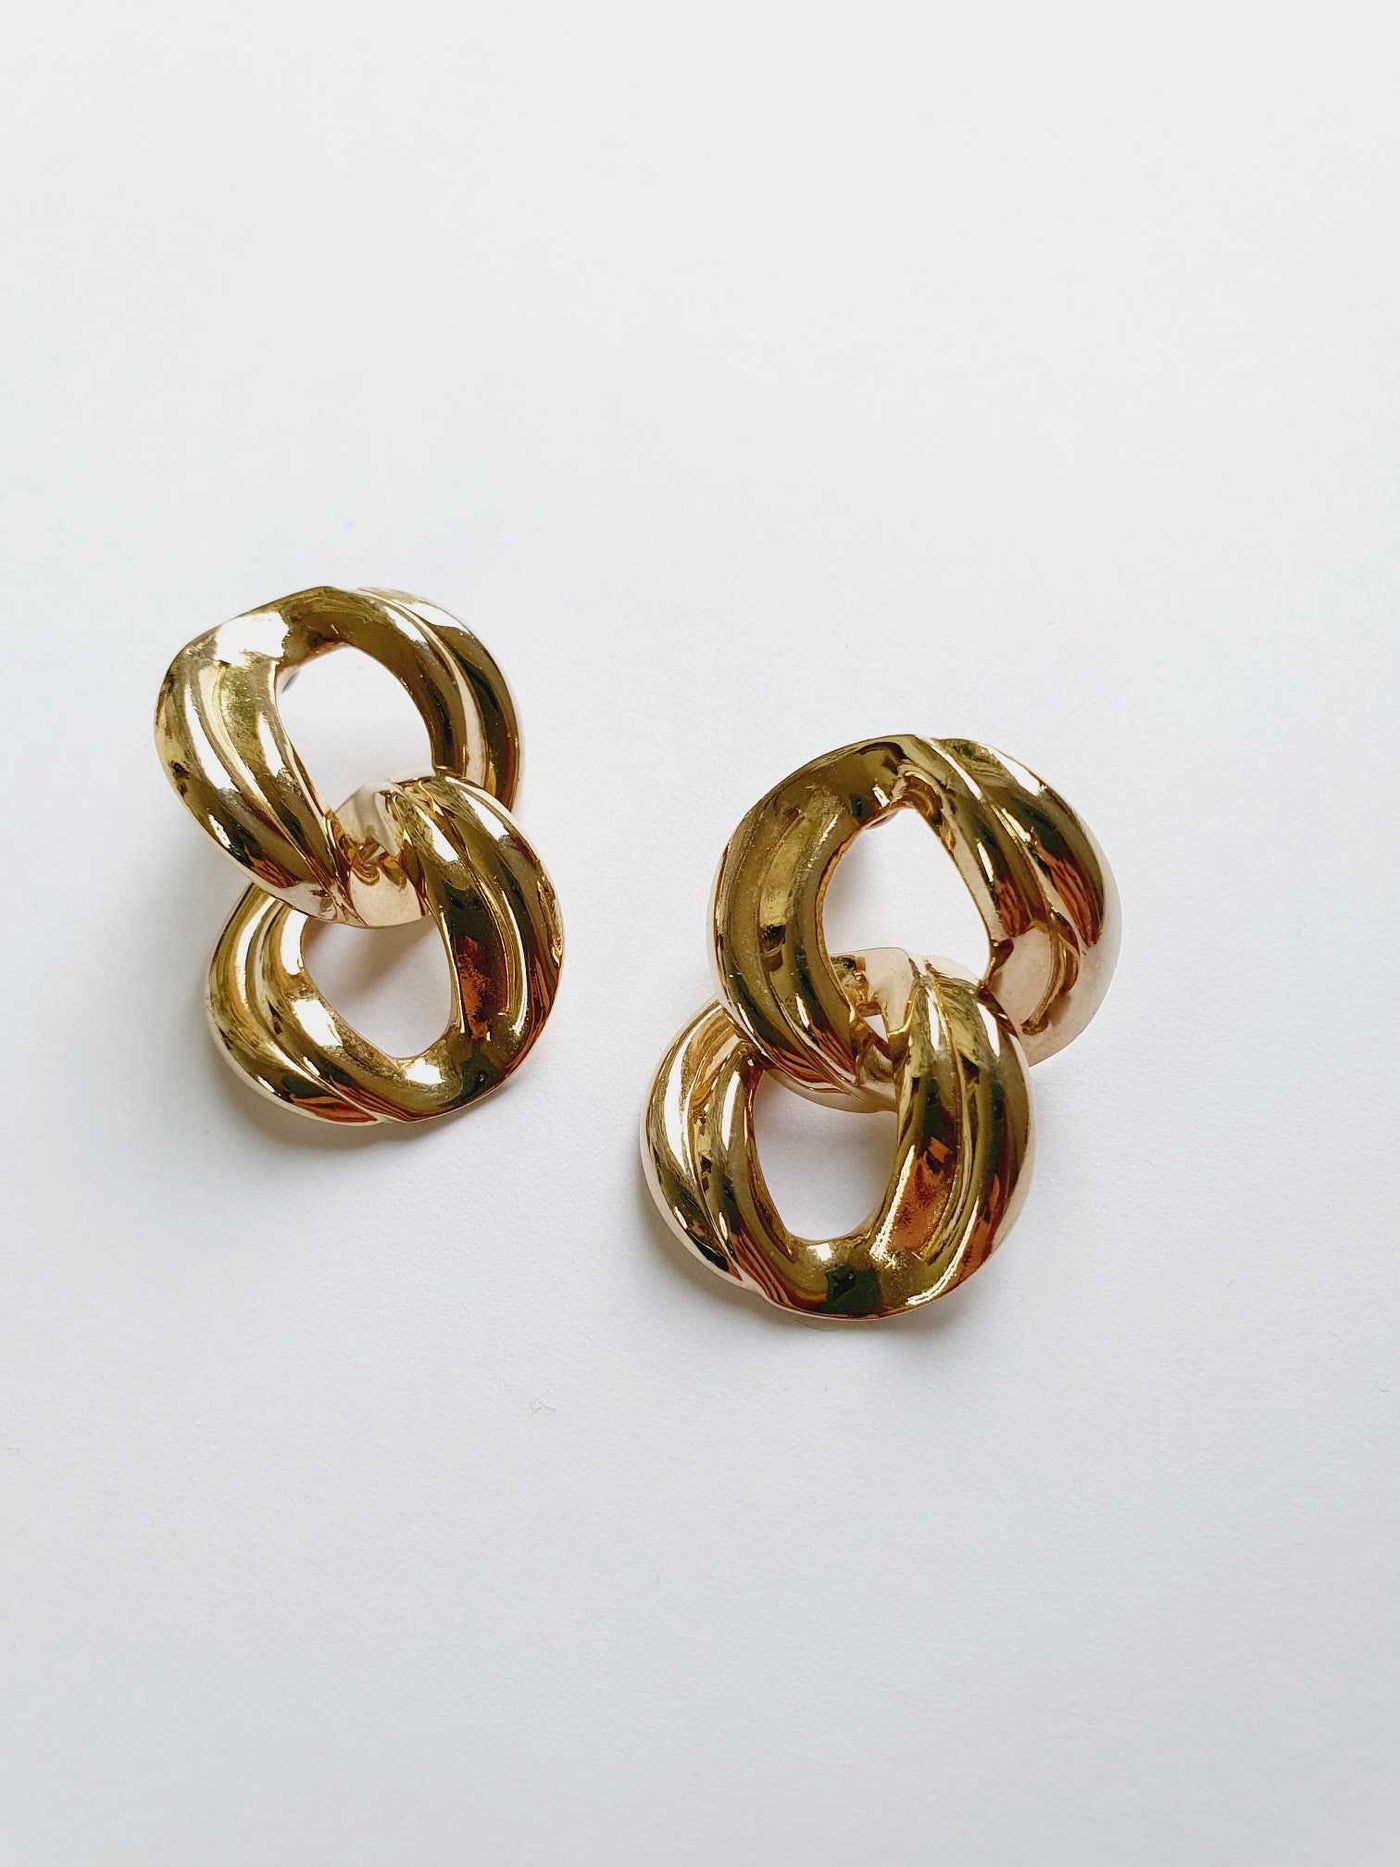 Vintage Gold Toned Link Earrings